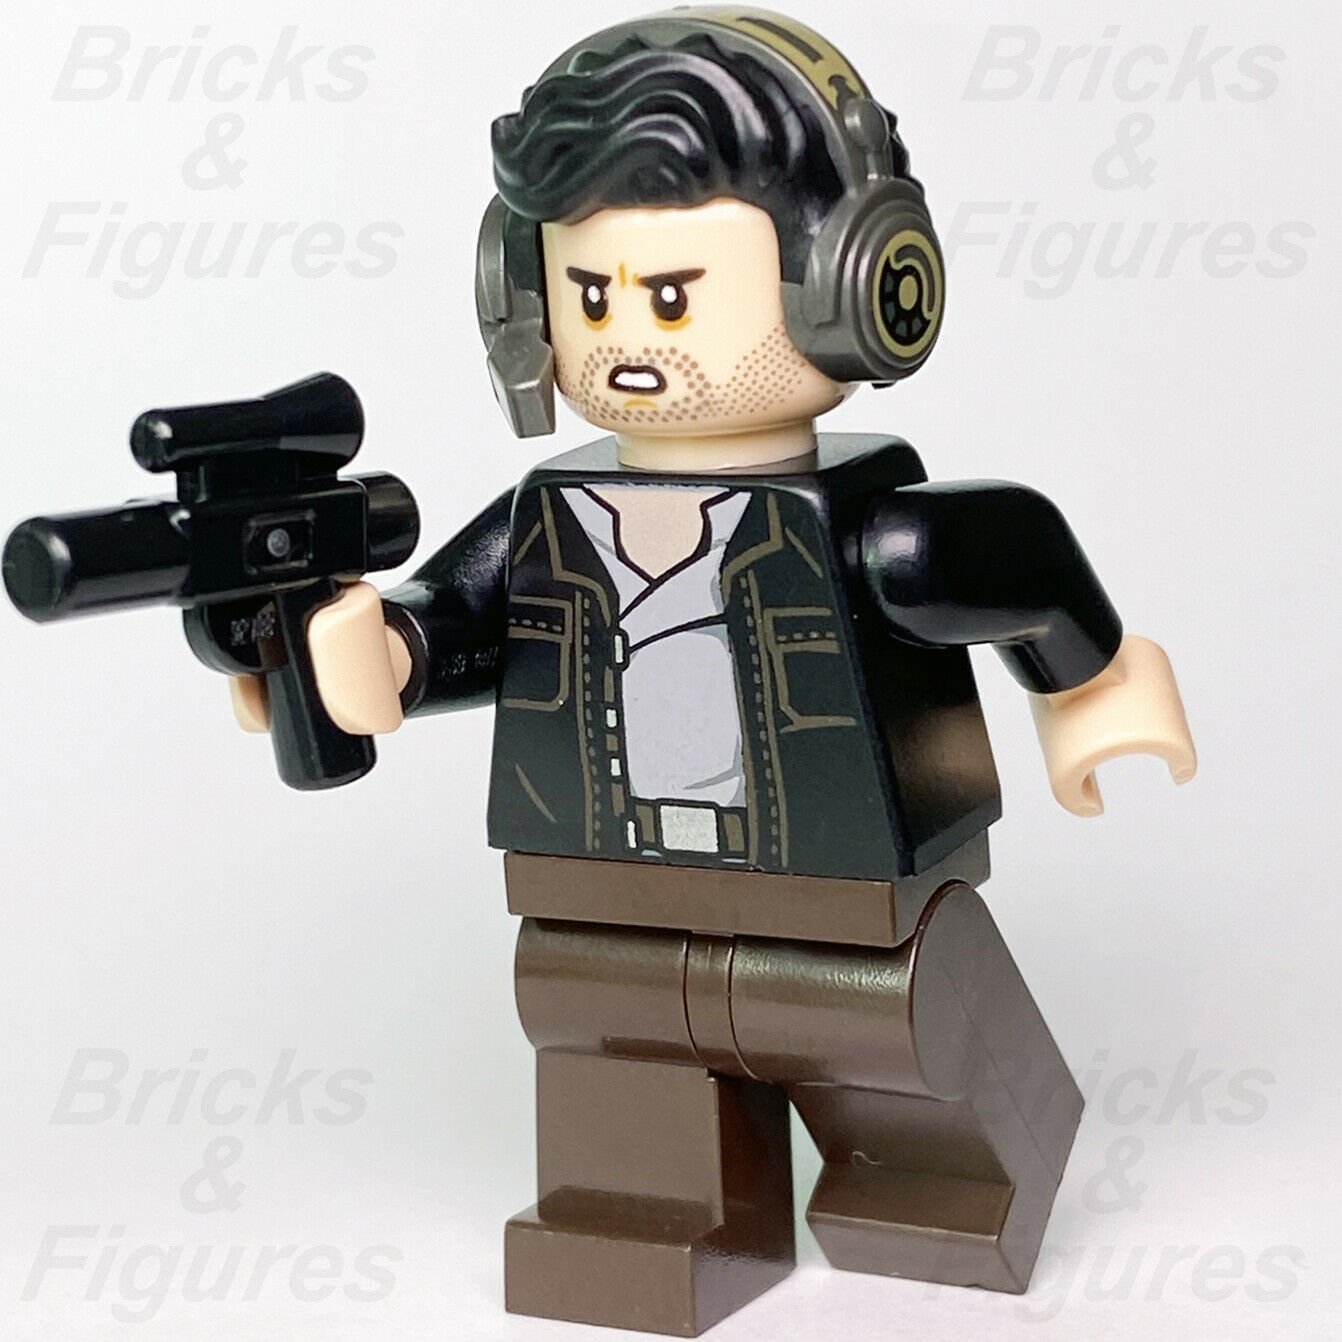 Star Wars LEGO Captain Poe Dameron with Headset The Last Jedi Minifigure 75202 - Bricks & Figures